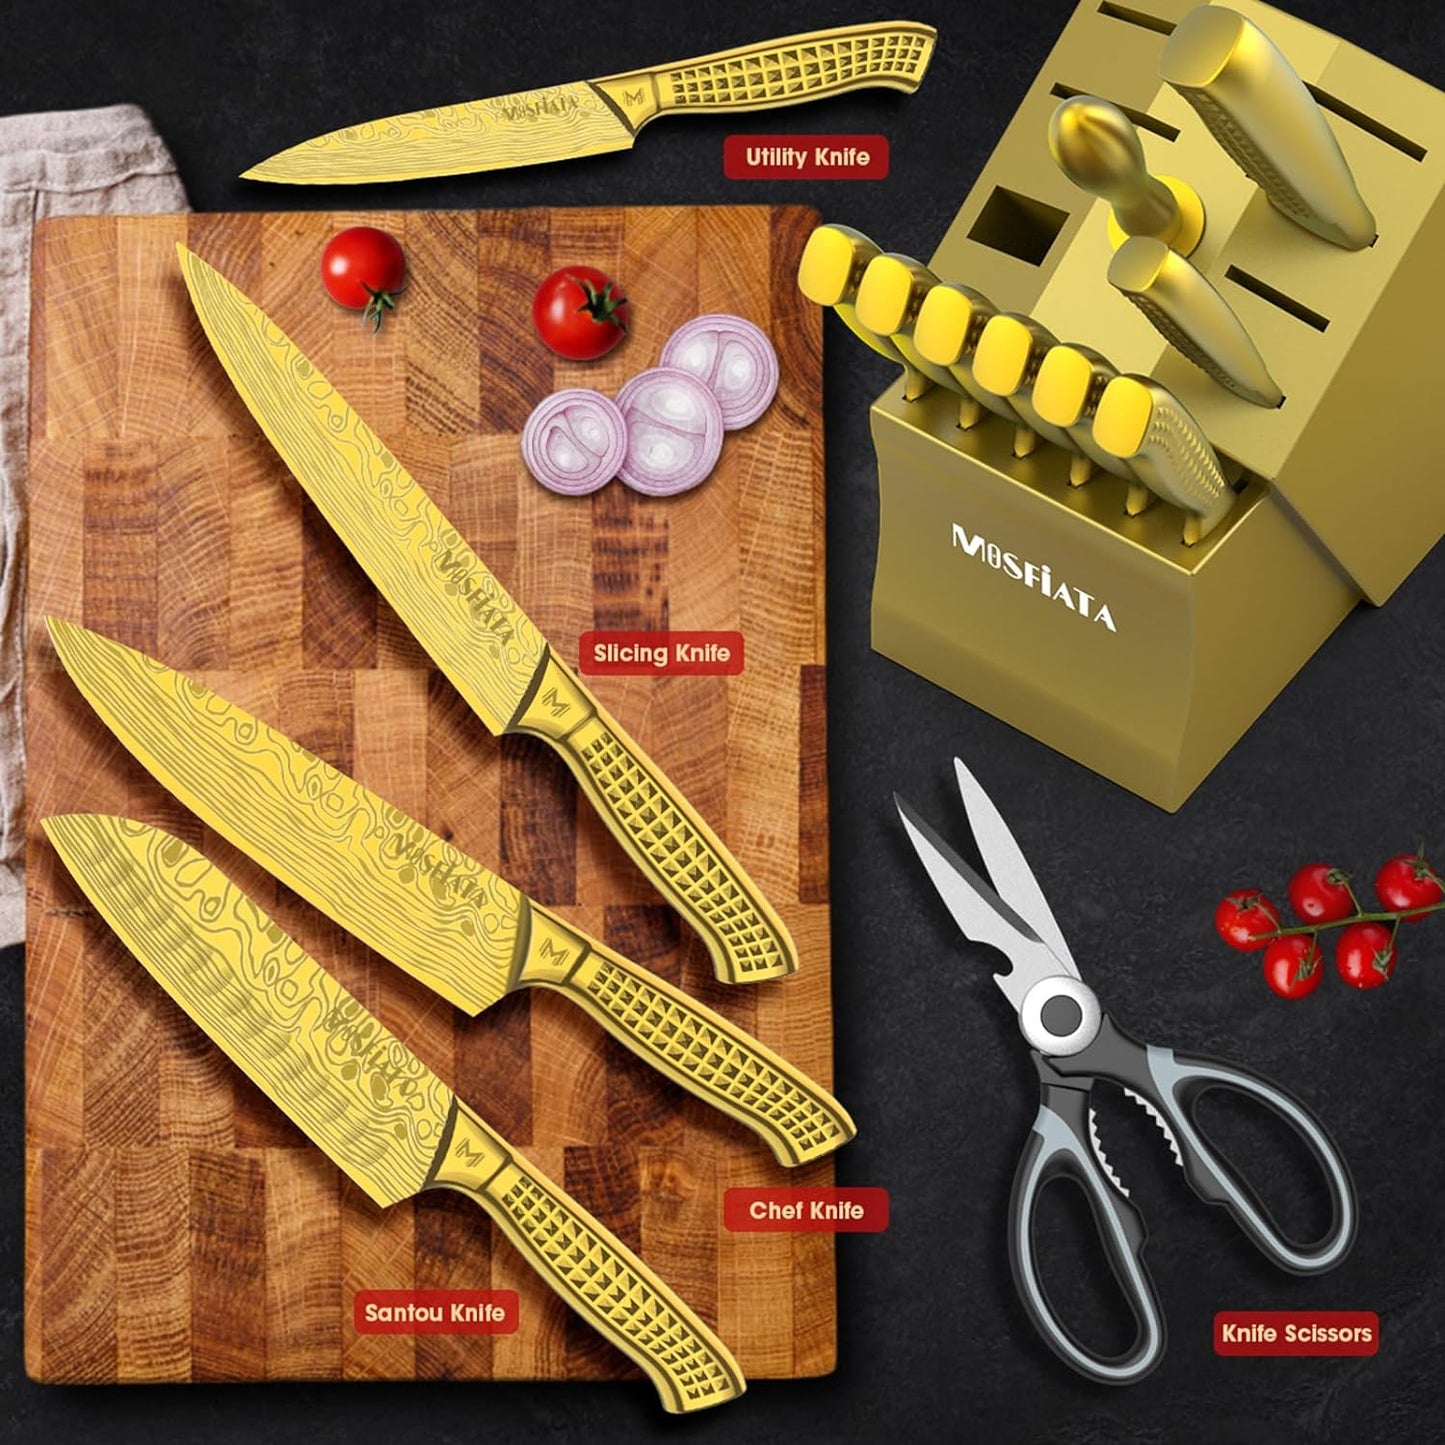 MOSFiATA Kitchen Knife Set, 17 Pcs Japanese Stainless Steel Knife Sets for Kitchen with Block with Knife Sharpening Rod, Dishwasher Safe, Gift Set,Titanium Plated Knife Block Set (Golden)